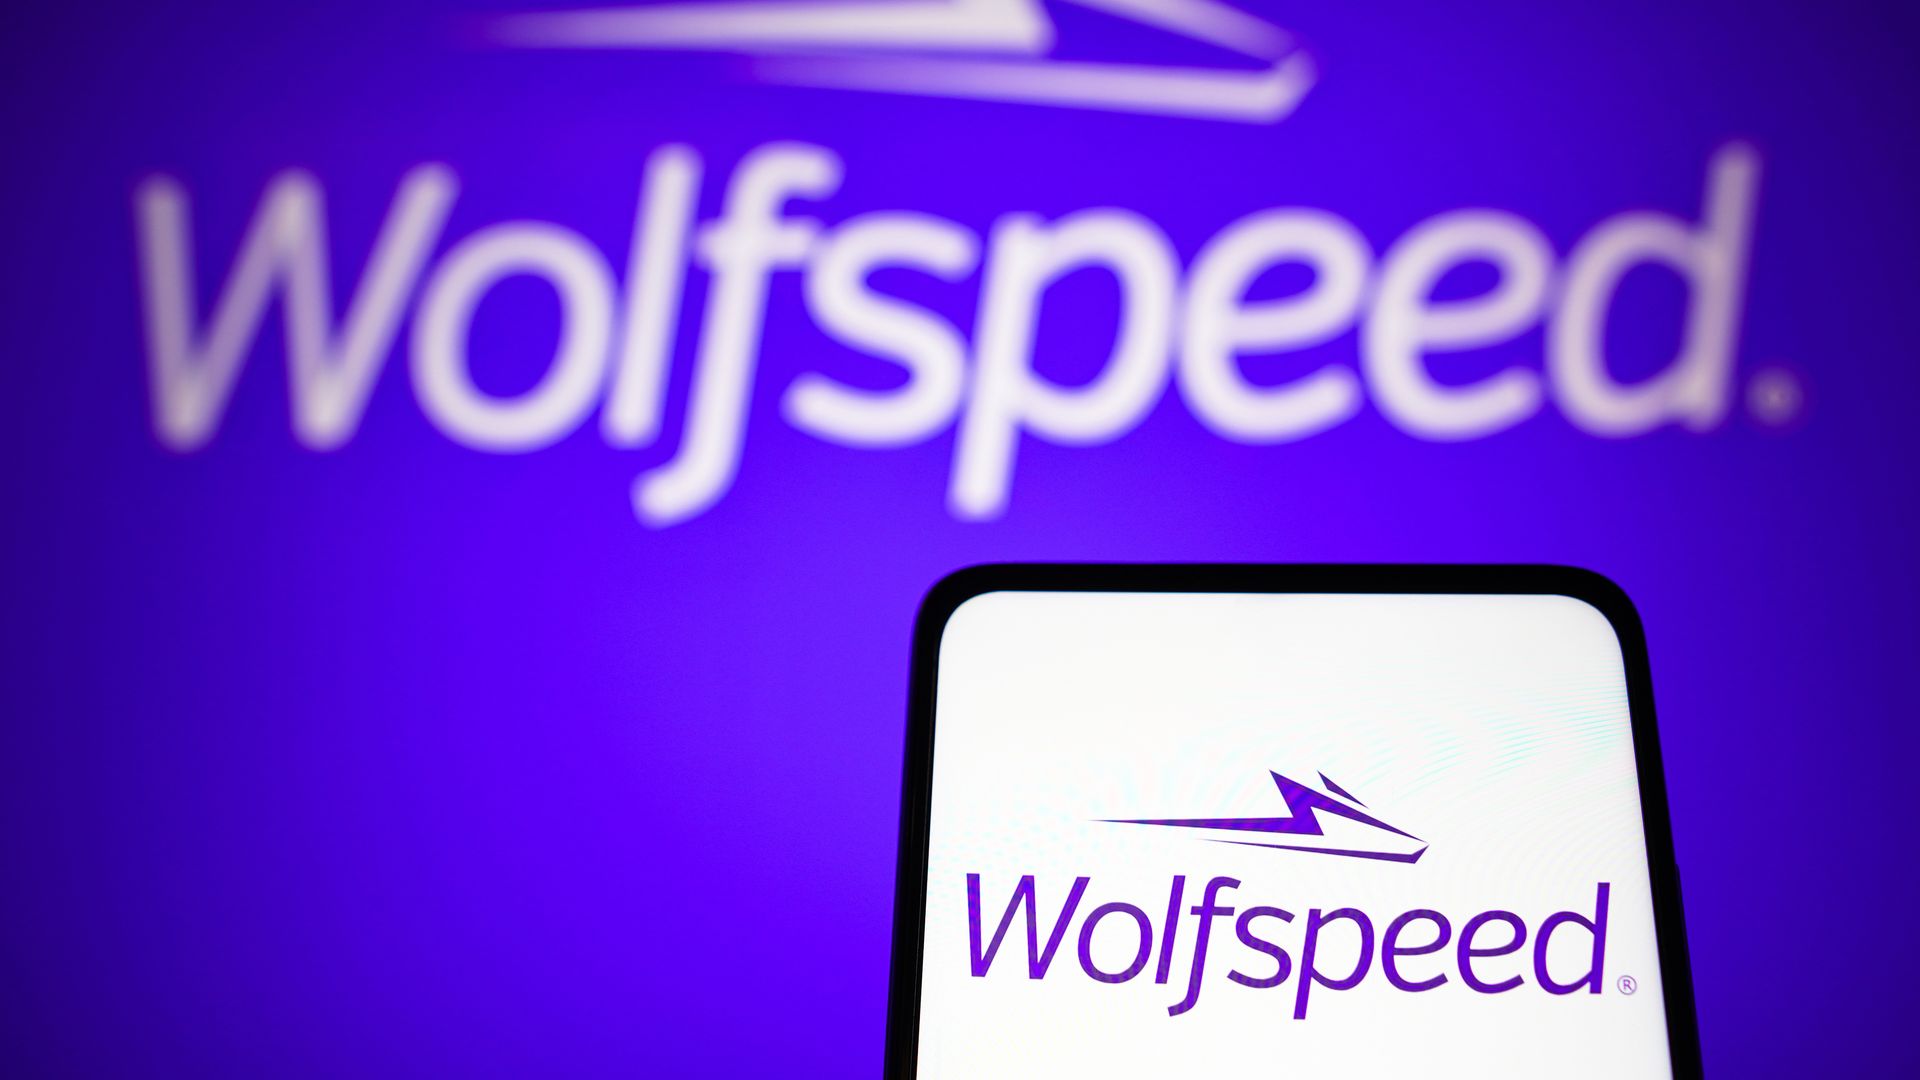 The Wolfspeed logo on a purple background. 